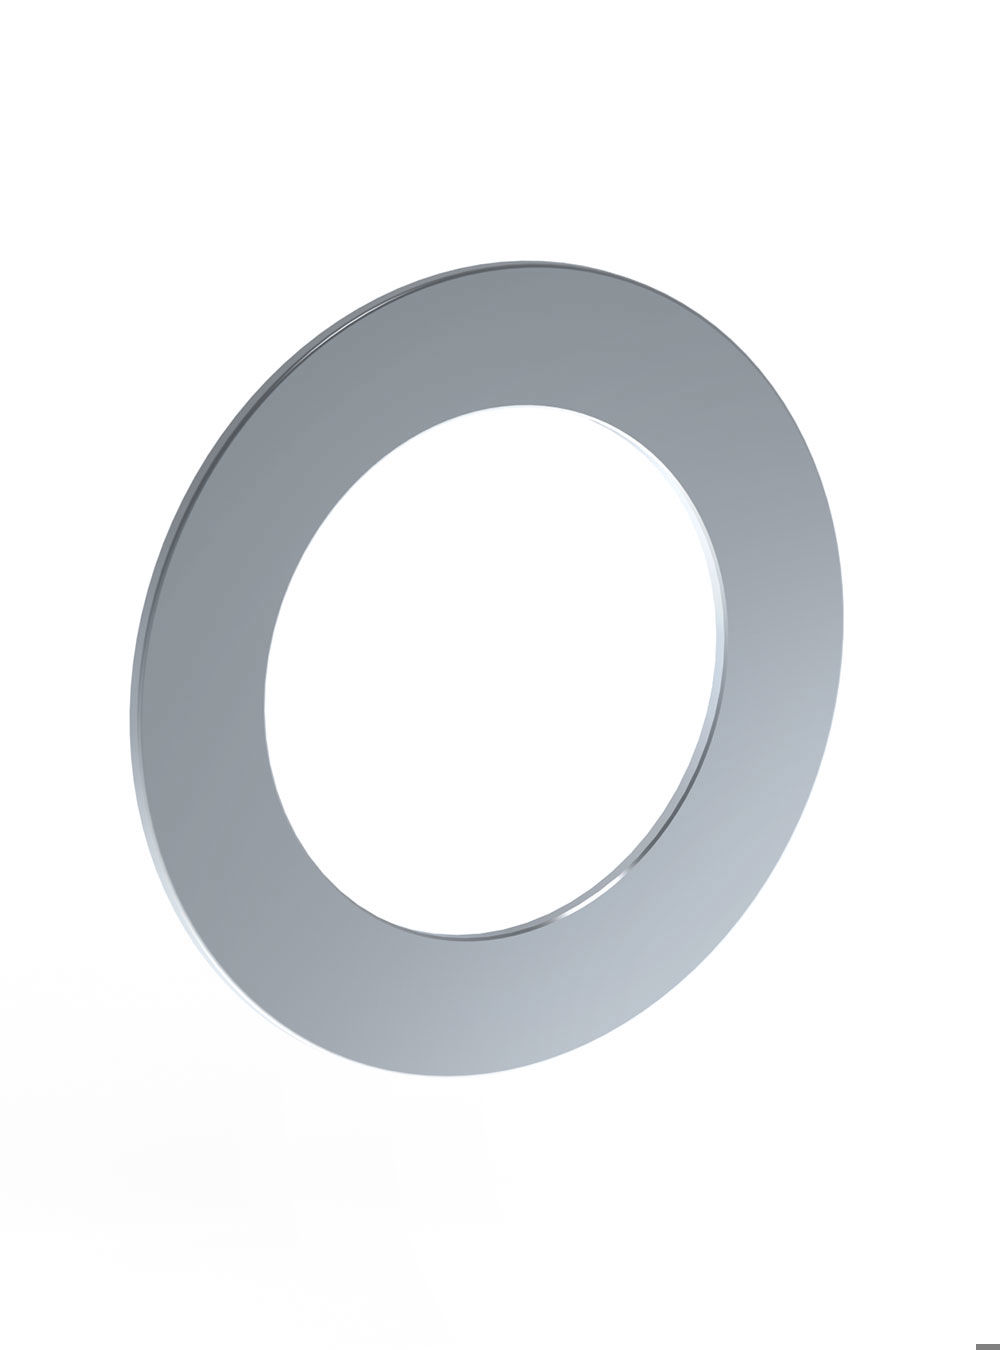 3001: 60 mm circular flange. Hole Ø36 mm.